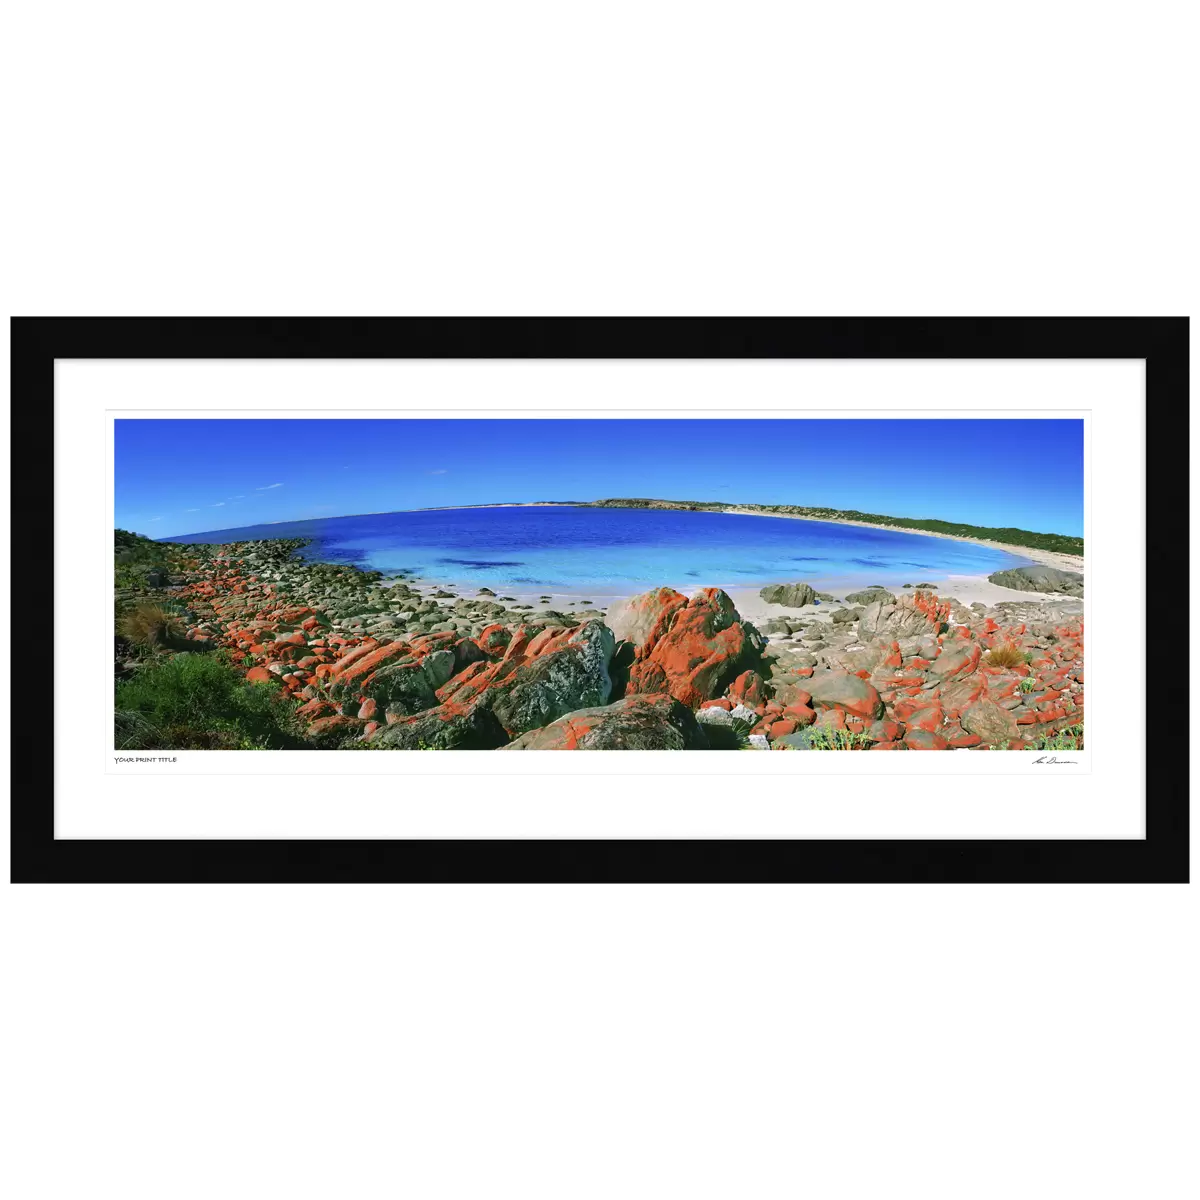 Ken Duncan 50 Inch Dolphin Beach, Innes NP, SA Framed Print